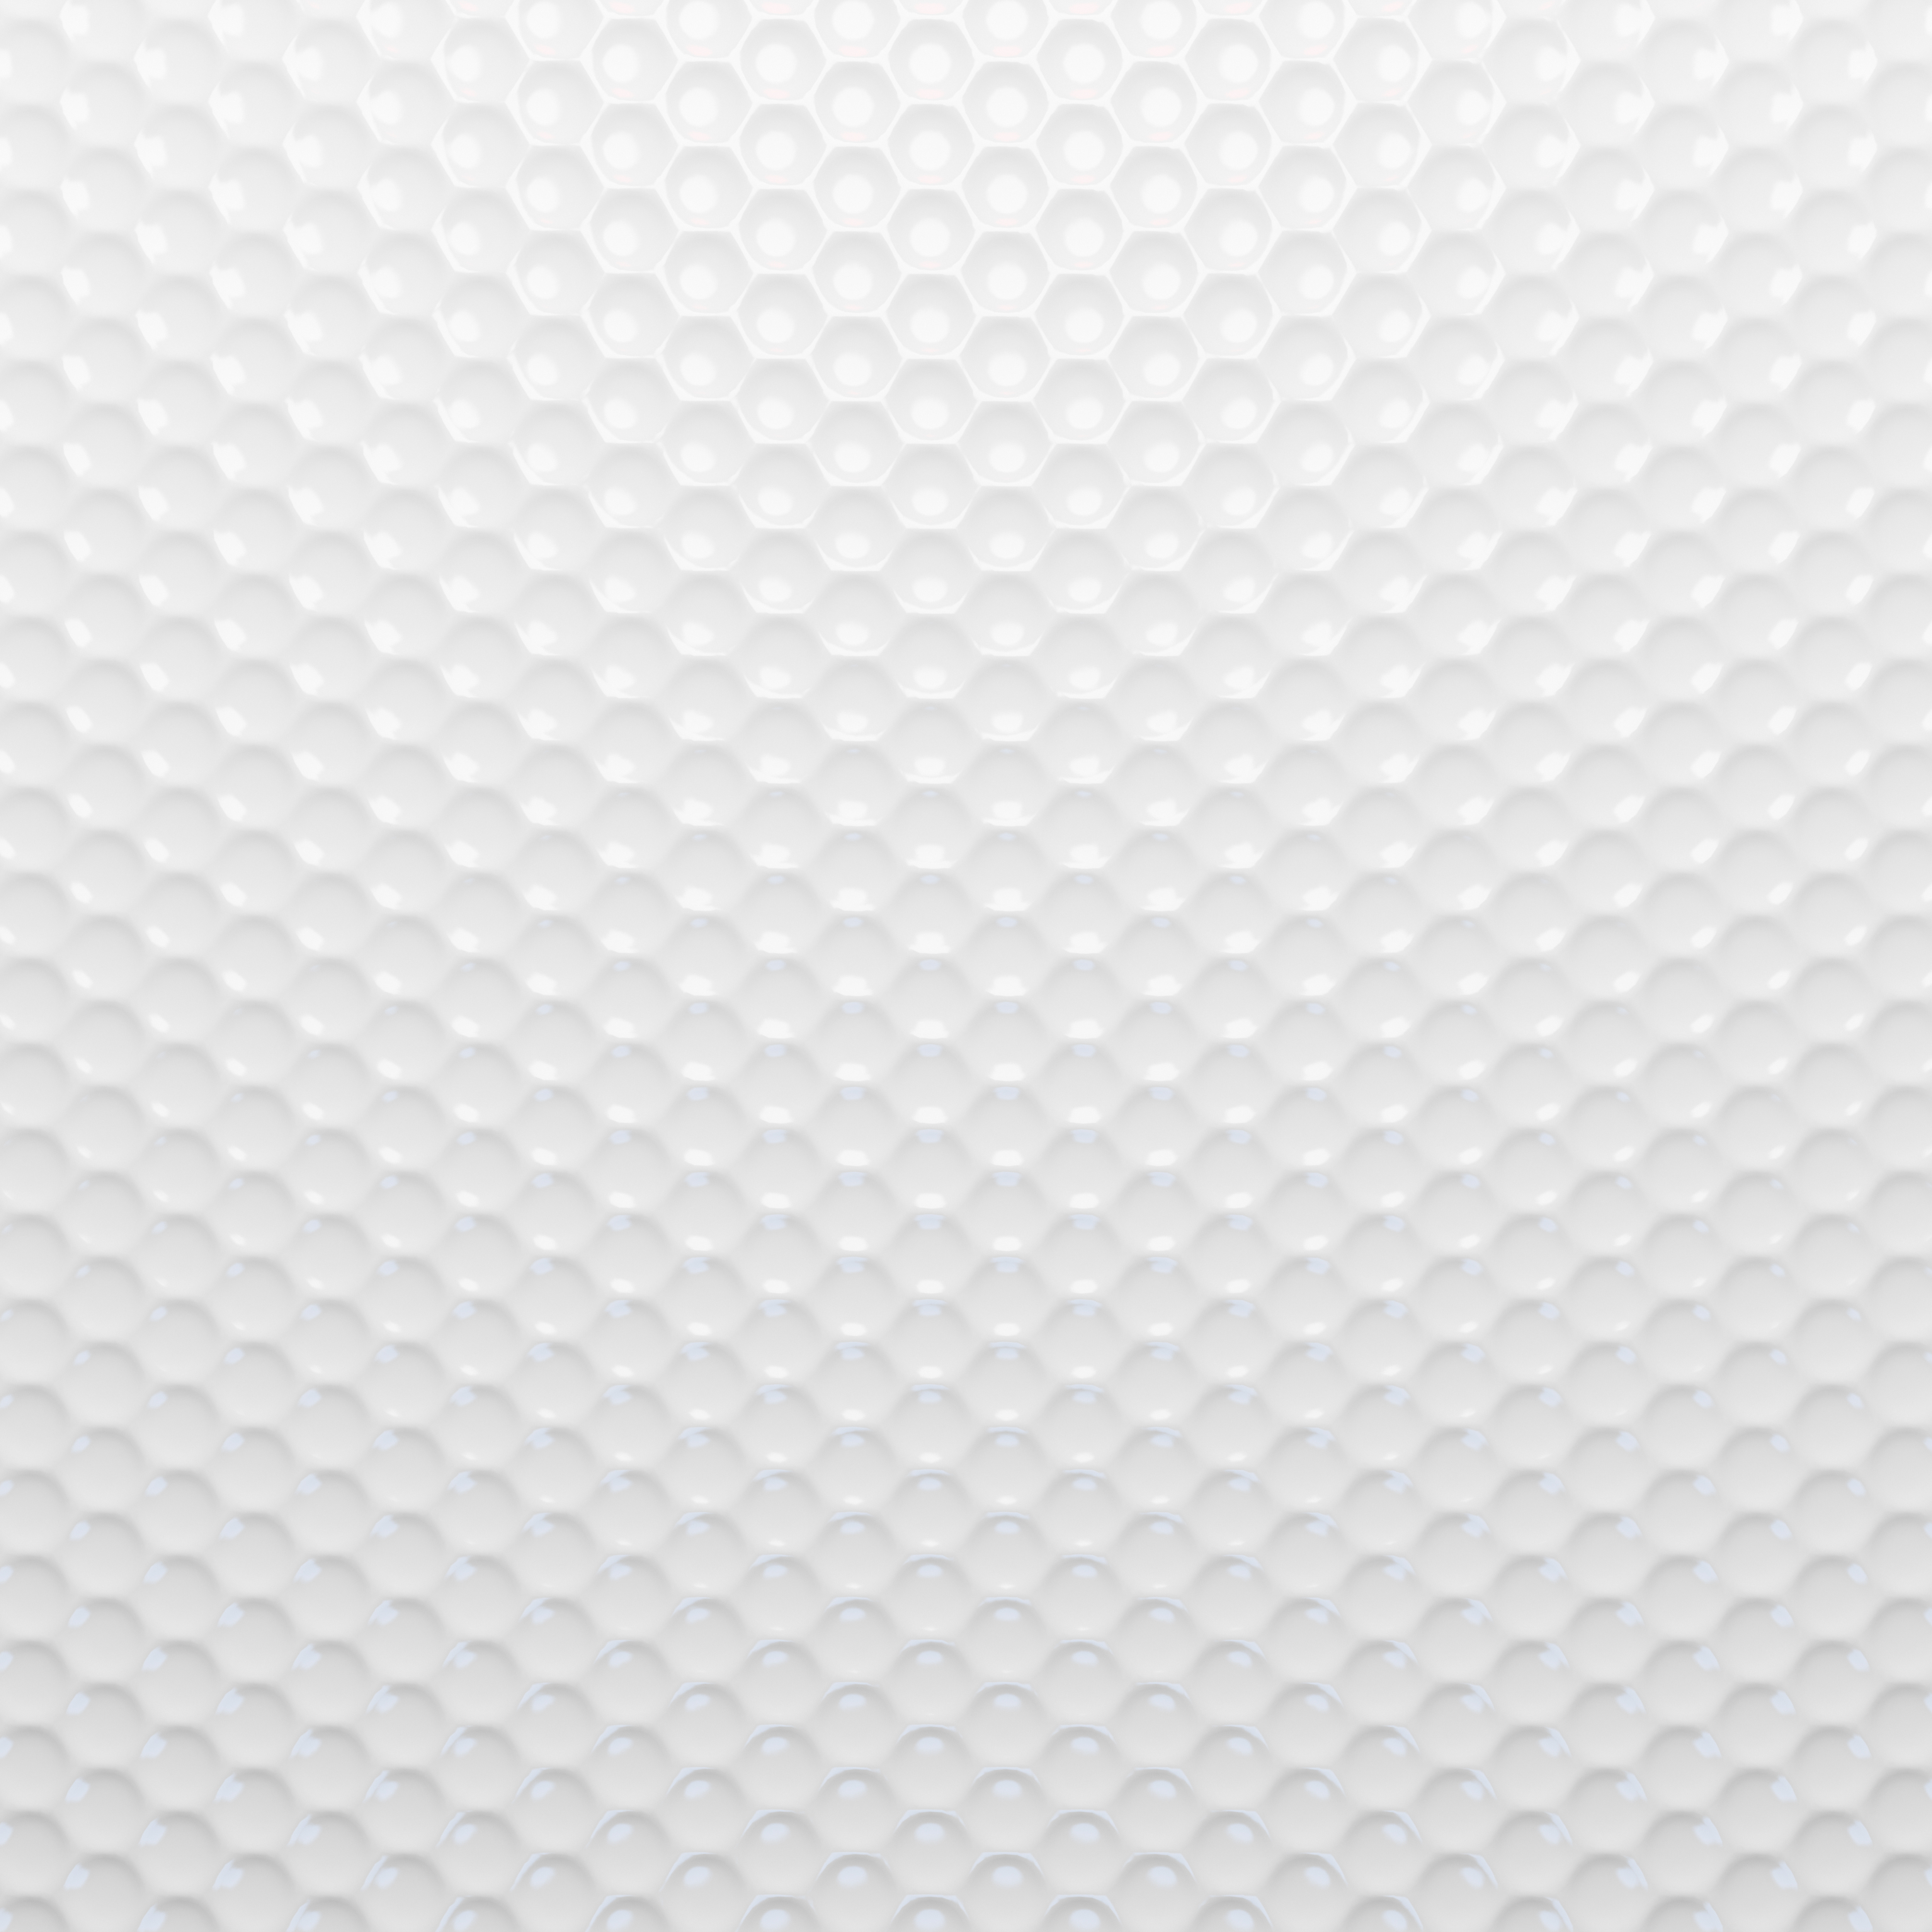 White texture wallpaper. Golf ball background